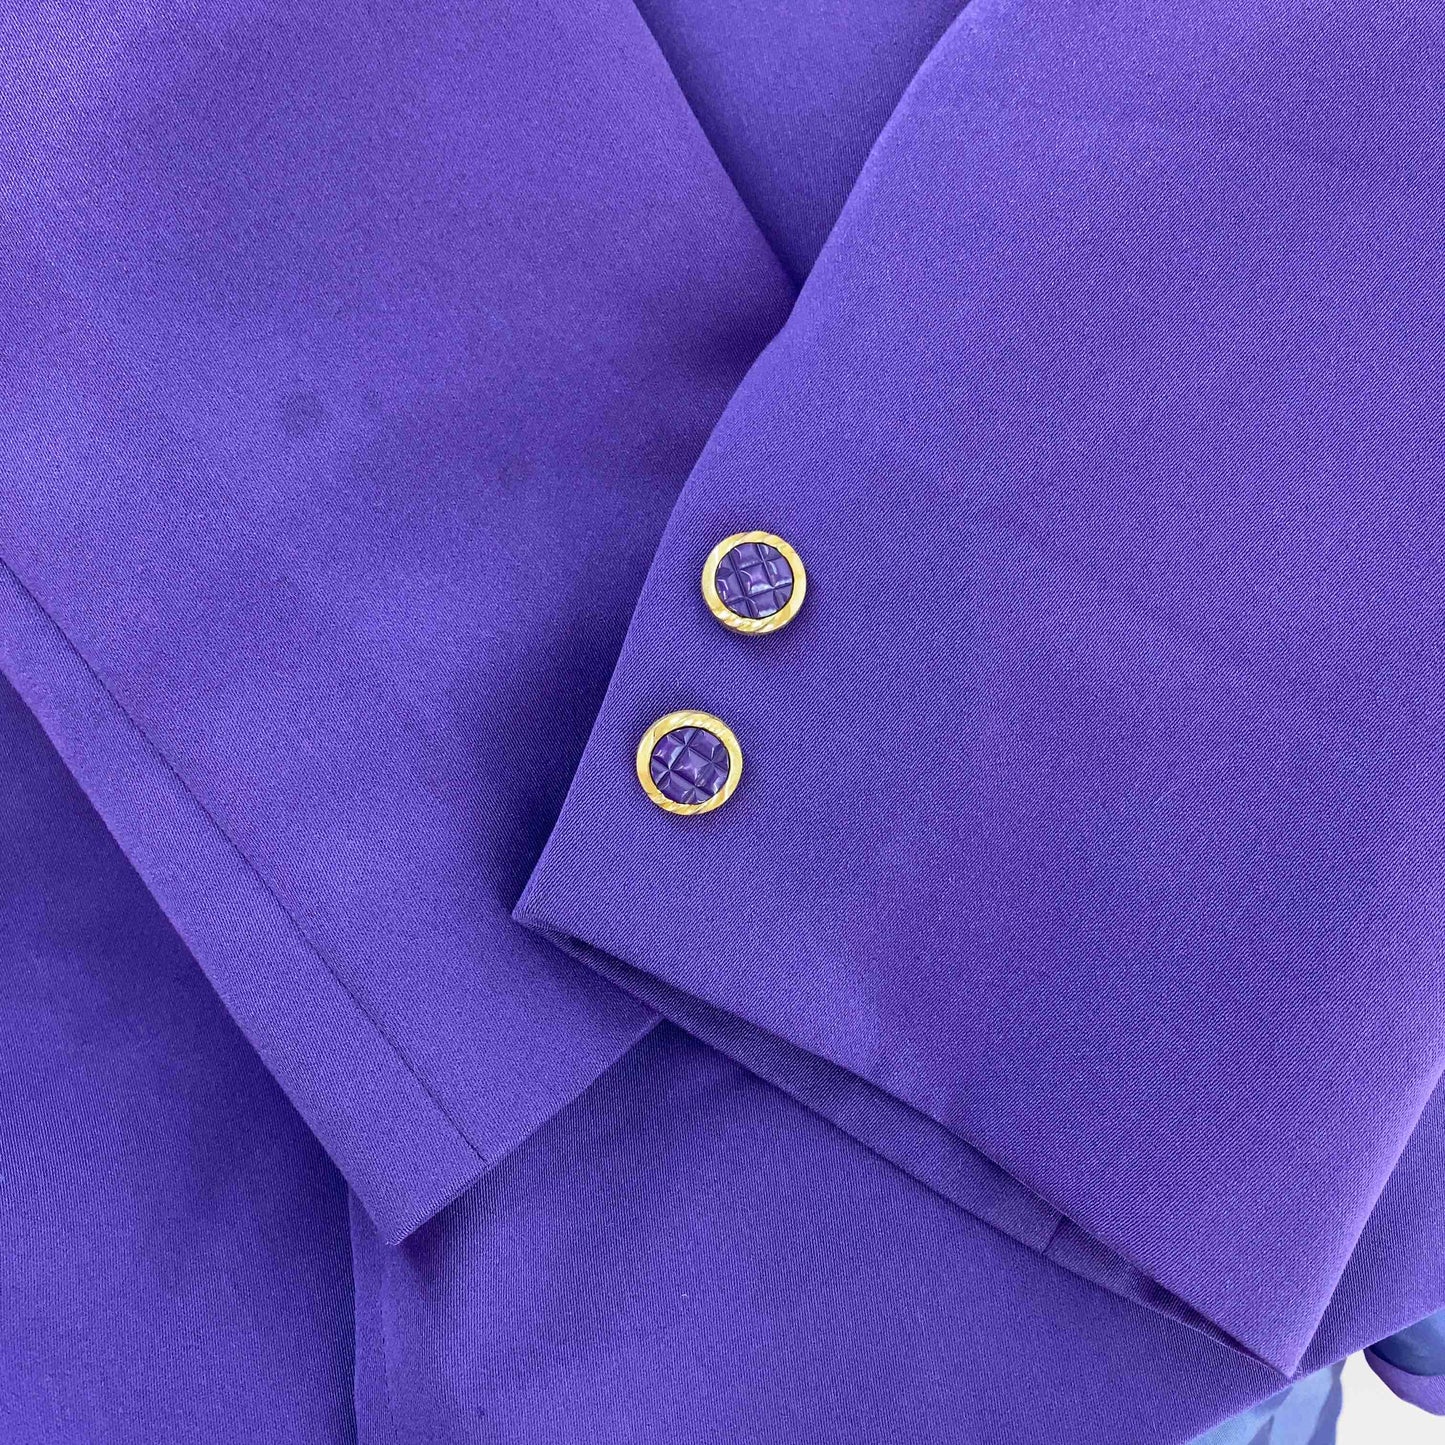 Auk mode スーツセットアップ  レディース テーラードジャケット スカートスーツ セットアップ 紫 パープル